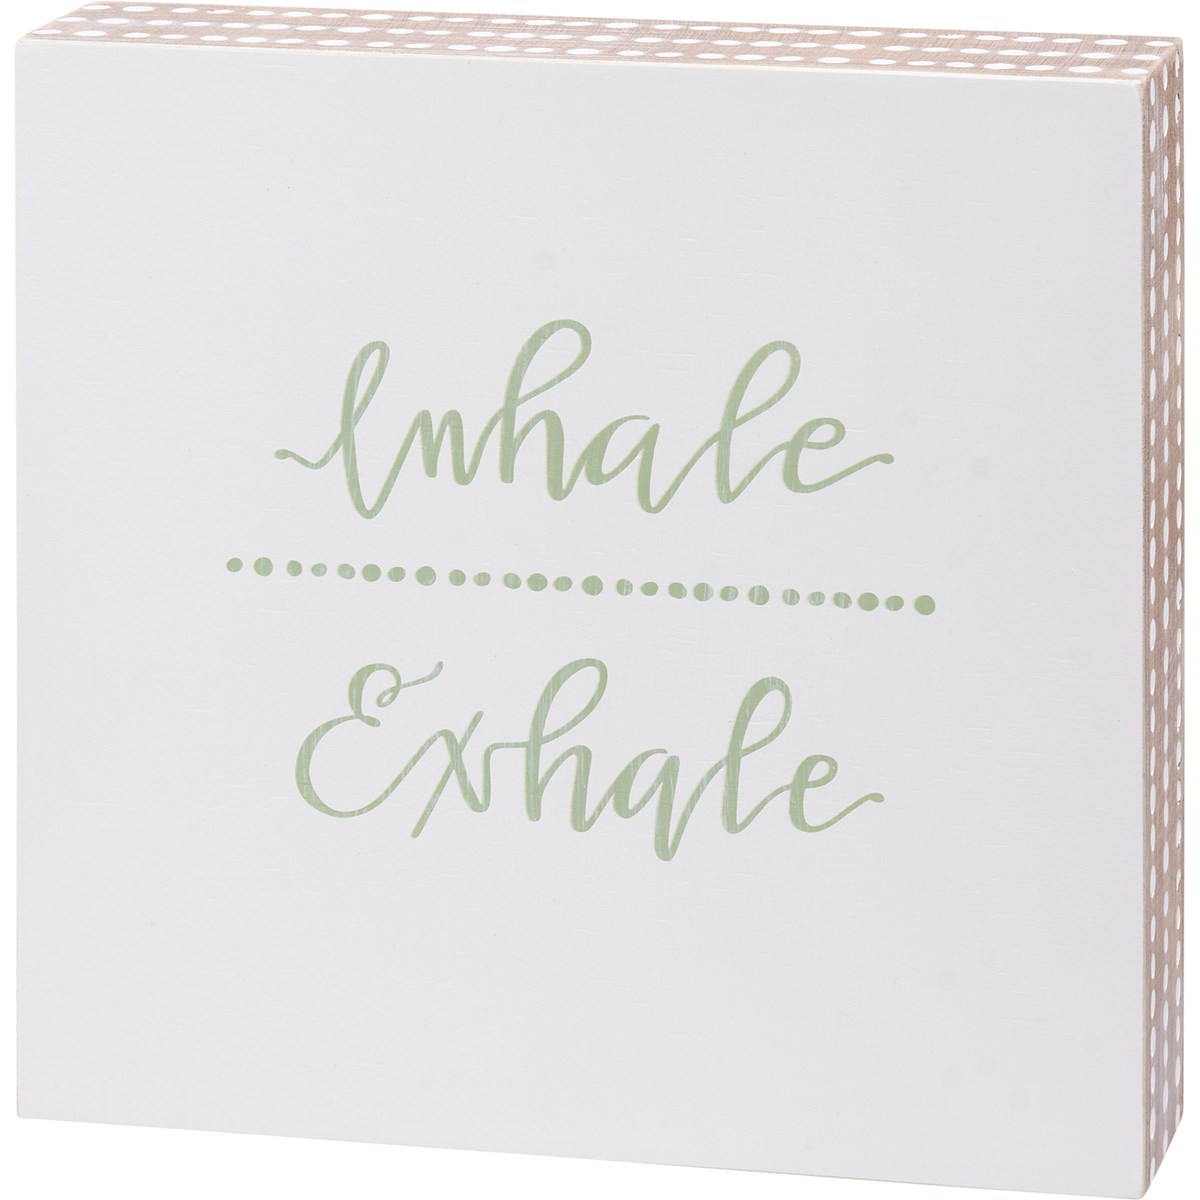 Box Sign - Inhale Exhale - 8" x 8" x 1.75" - Wood